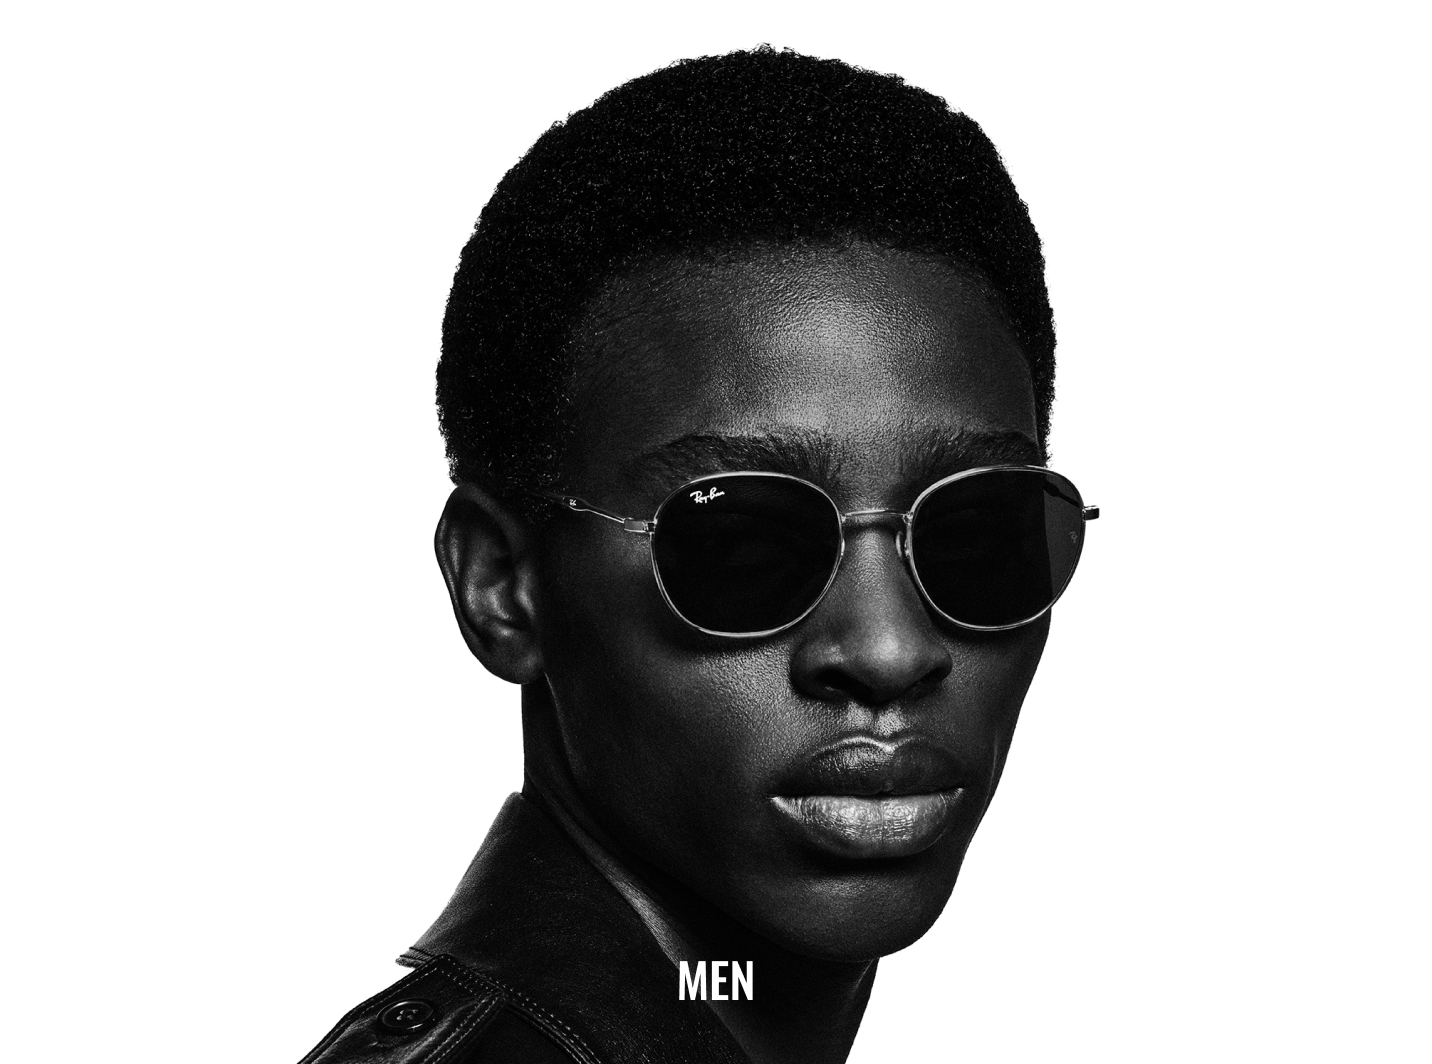 Ferrari Ray-Ban Men's Sunglasses | Ferrari Store